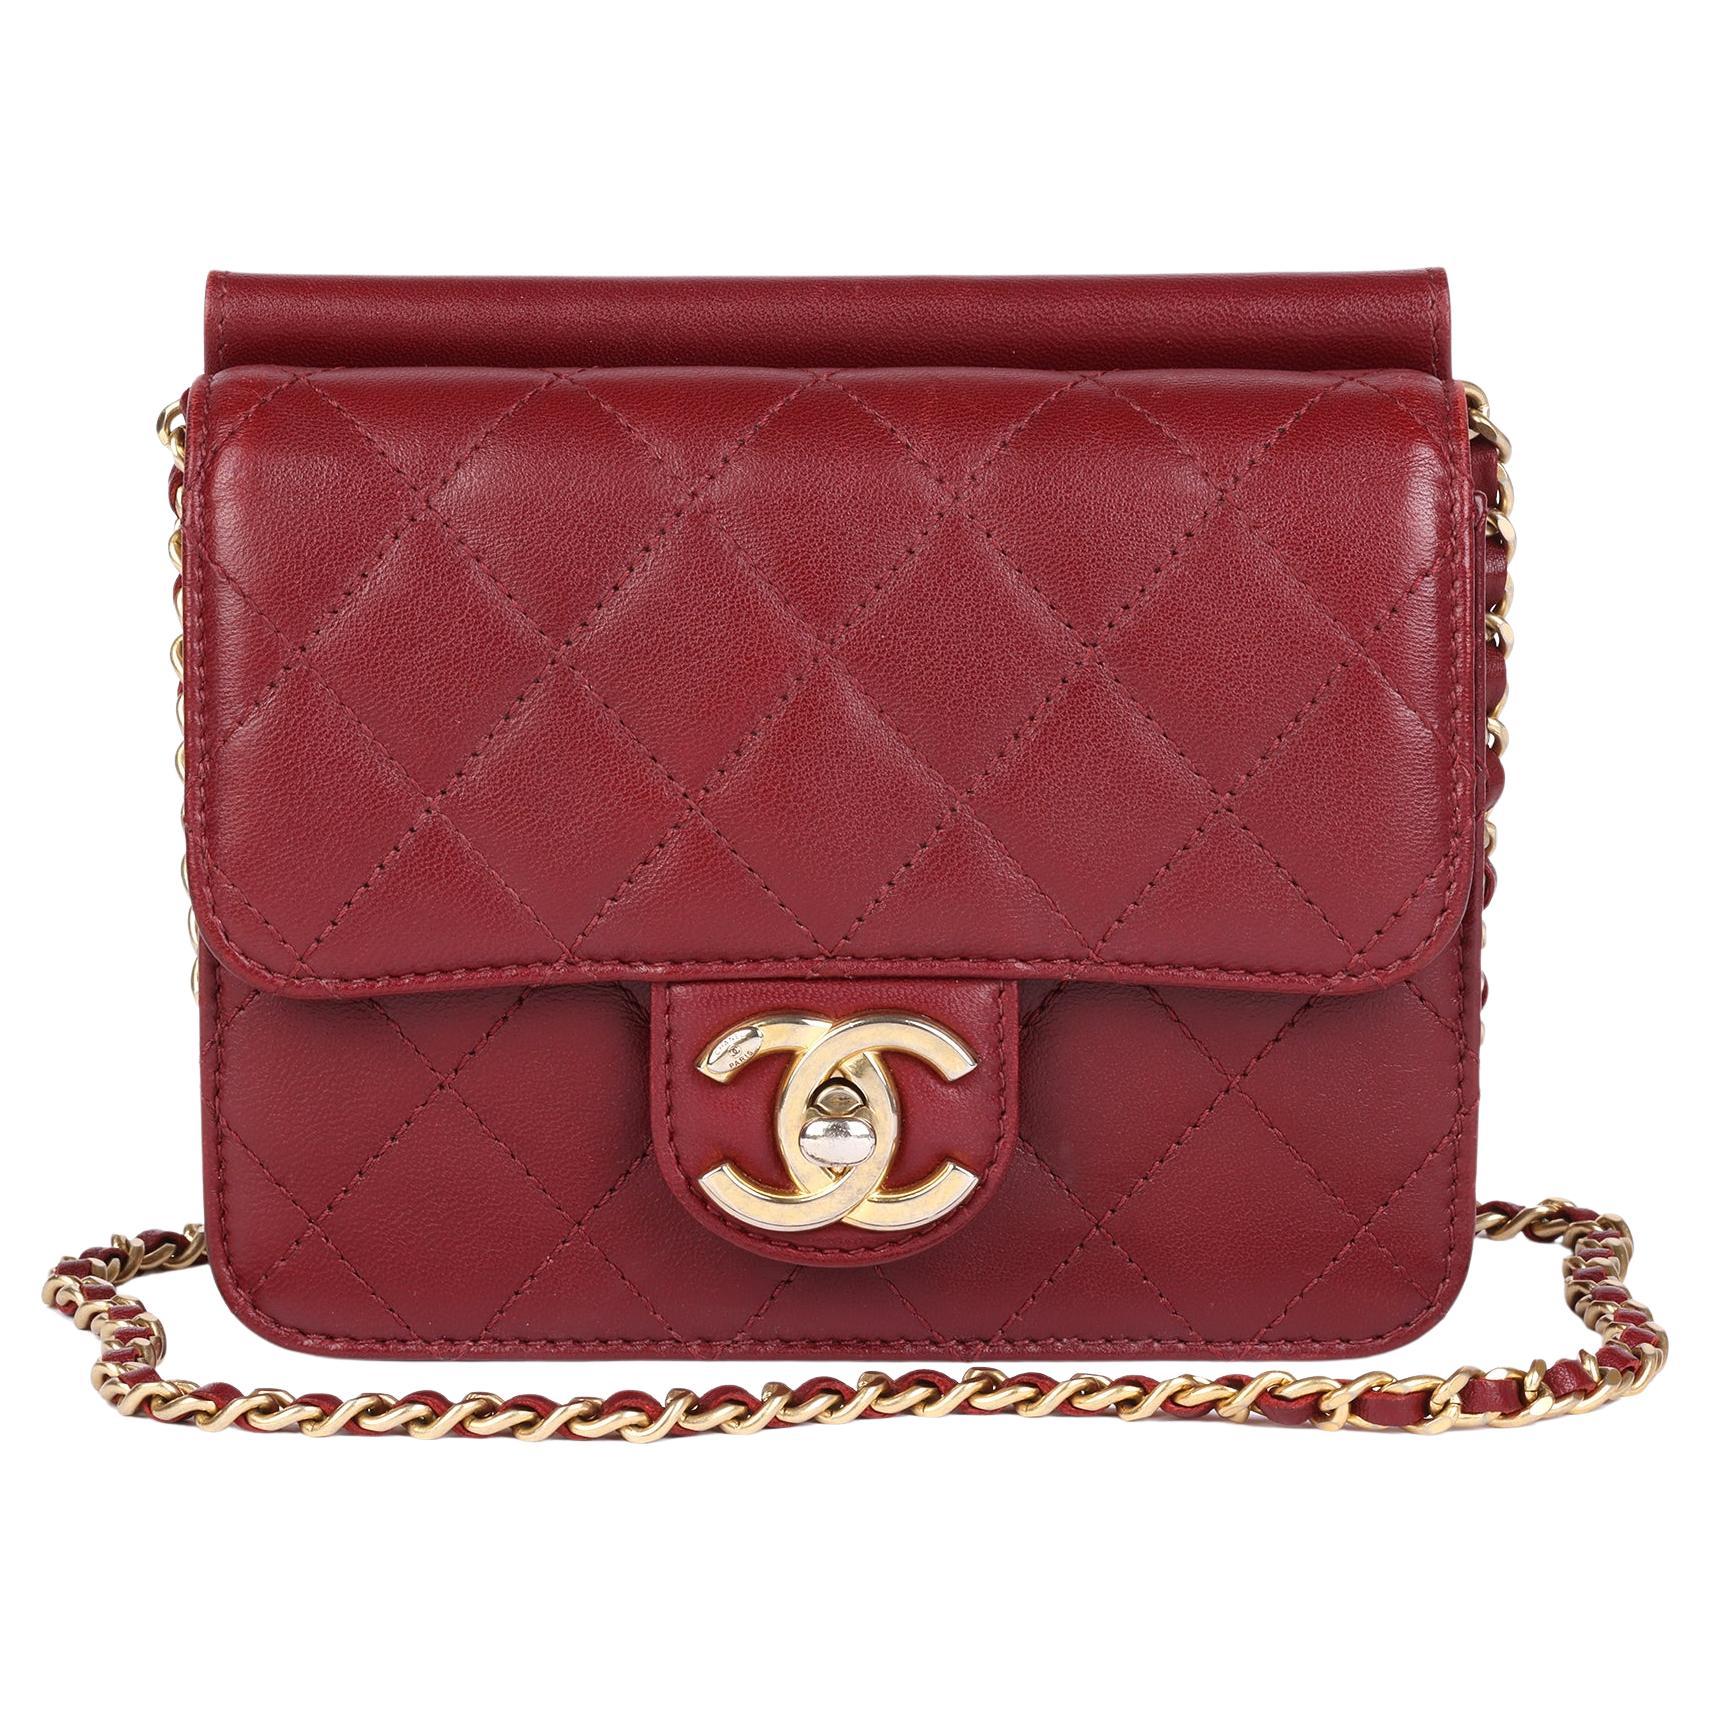 Burgundy Chanel Lambskin Bag - 156 For Sale on 1stDibs